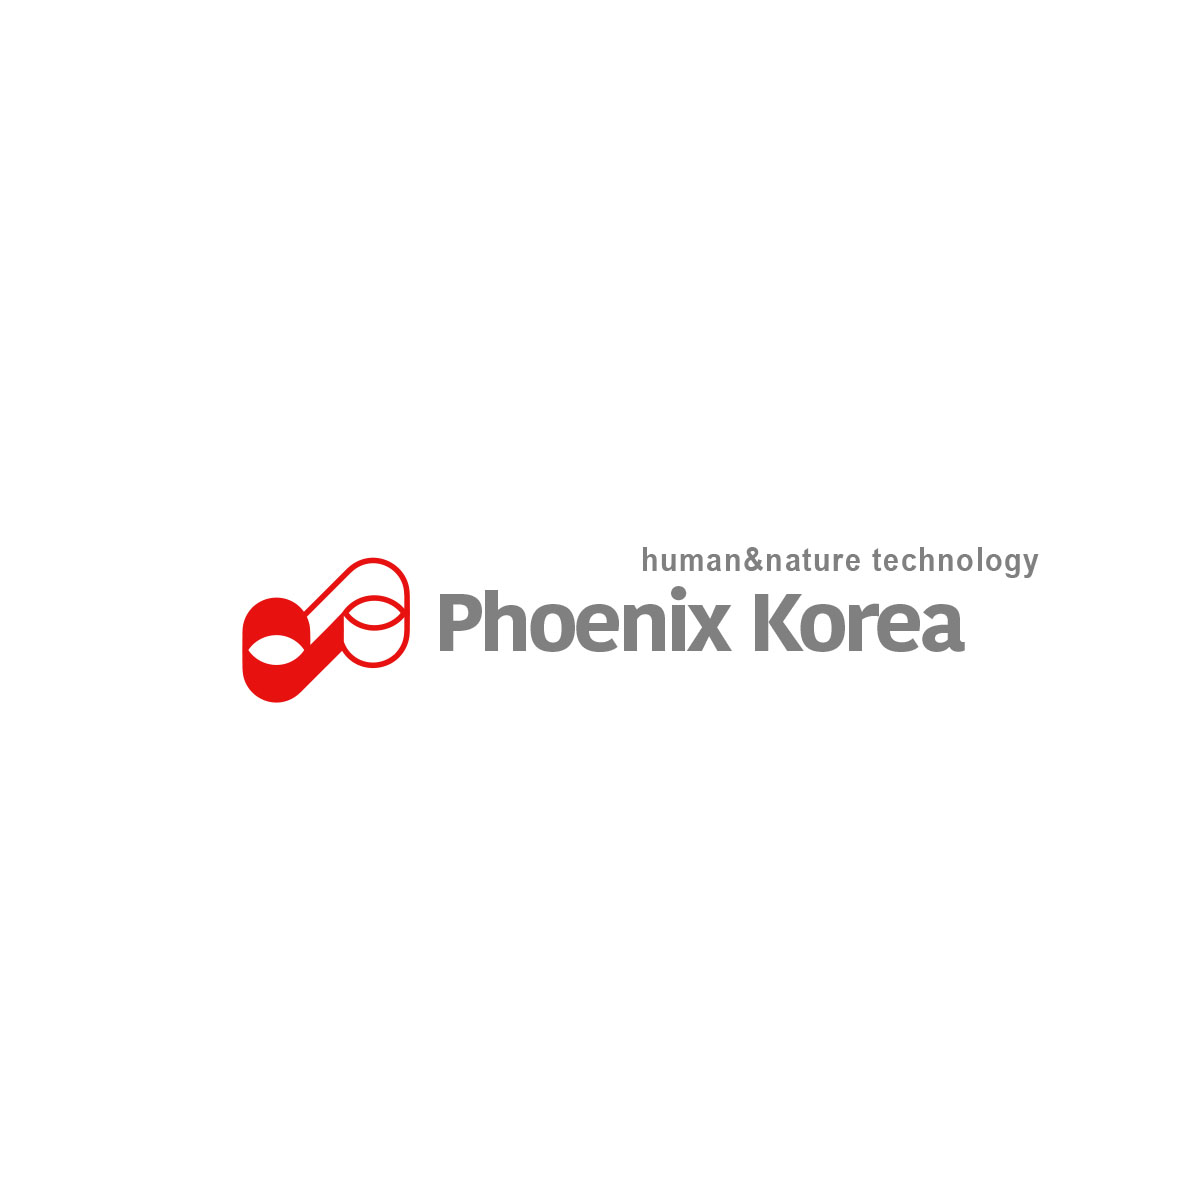 Phoenix Korea